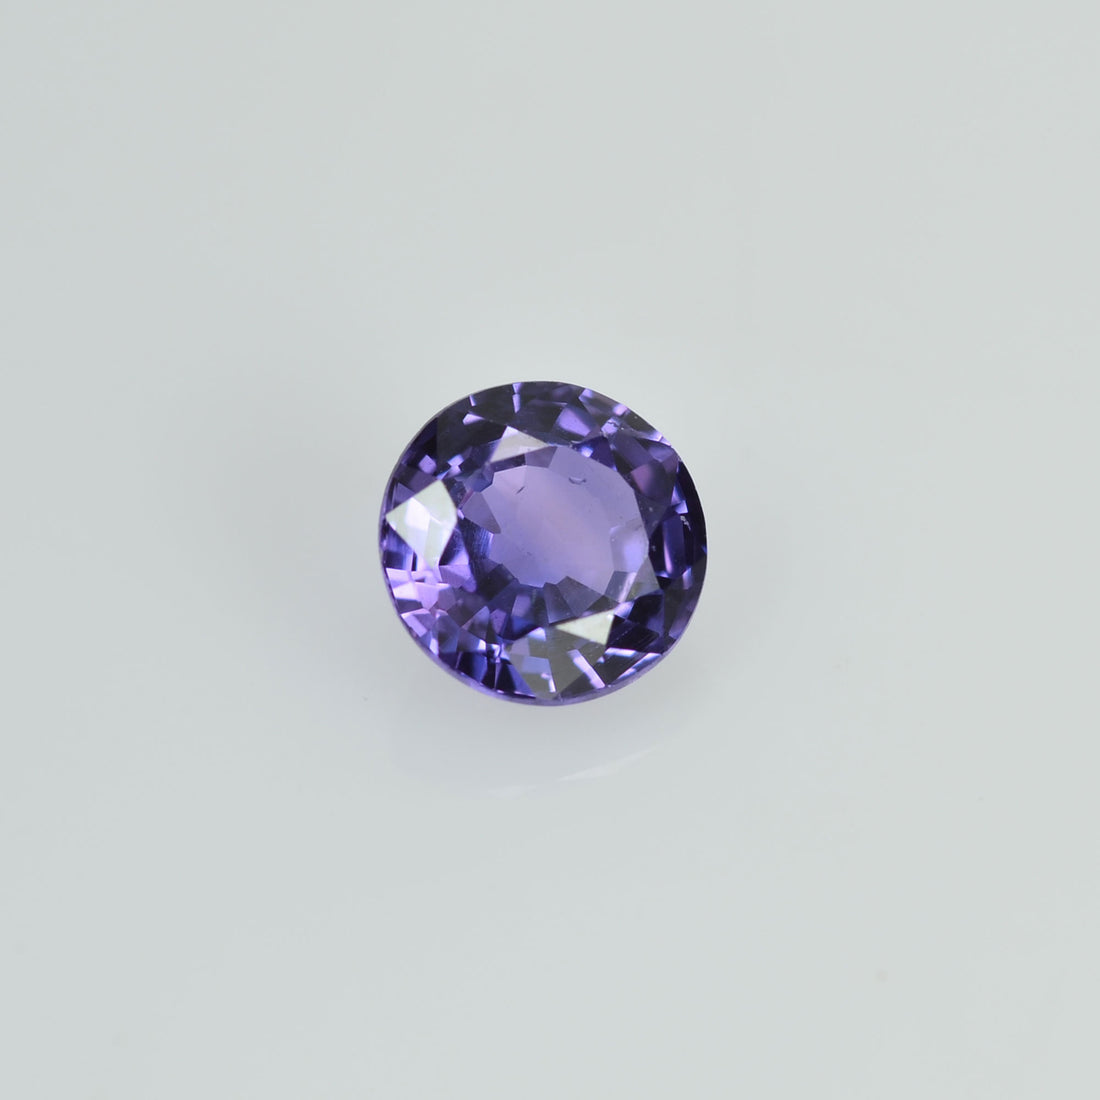 0.38 cts Natural Purple Sapphire Loose Gemstone Round Cut - Thai Gems Export Ltd.